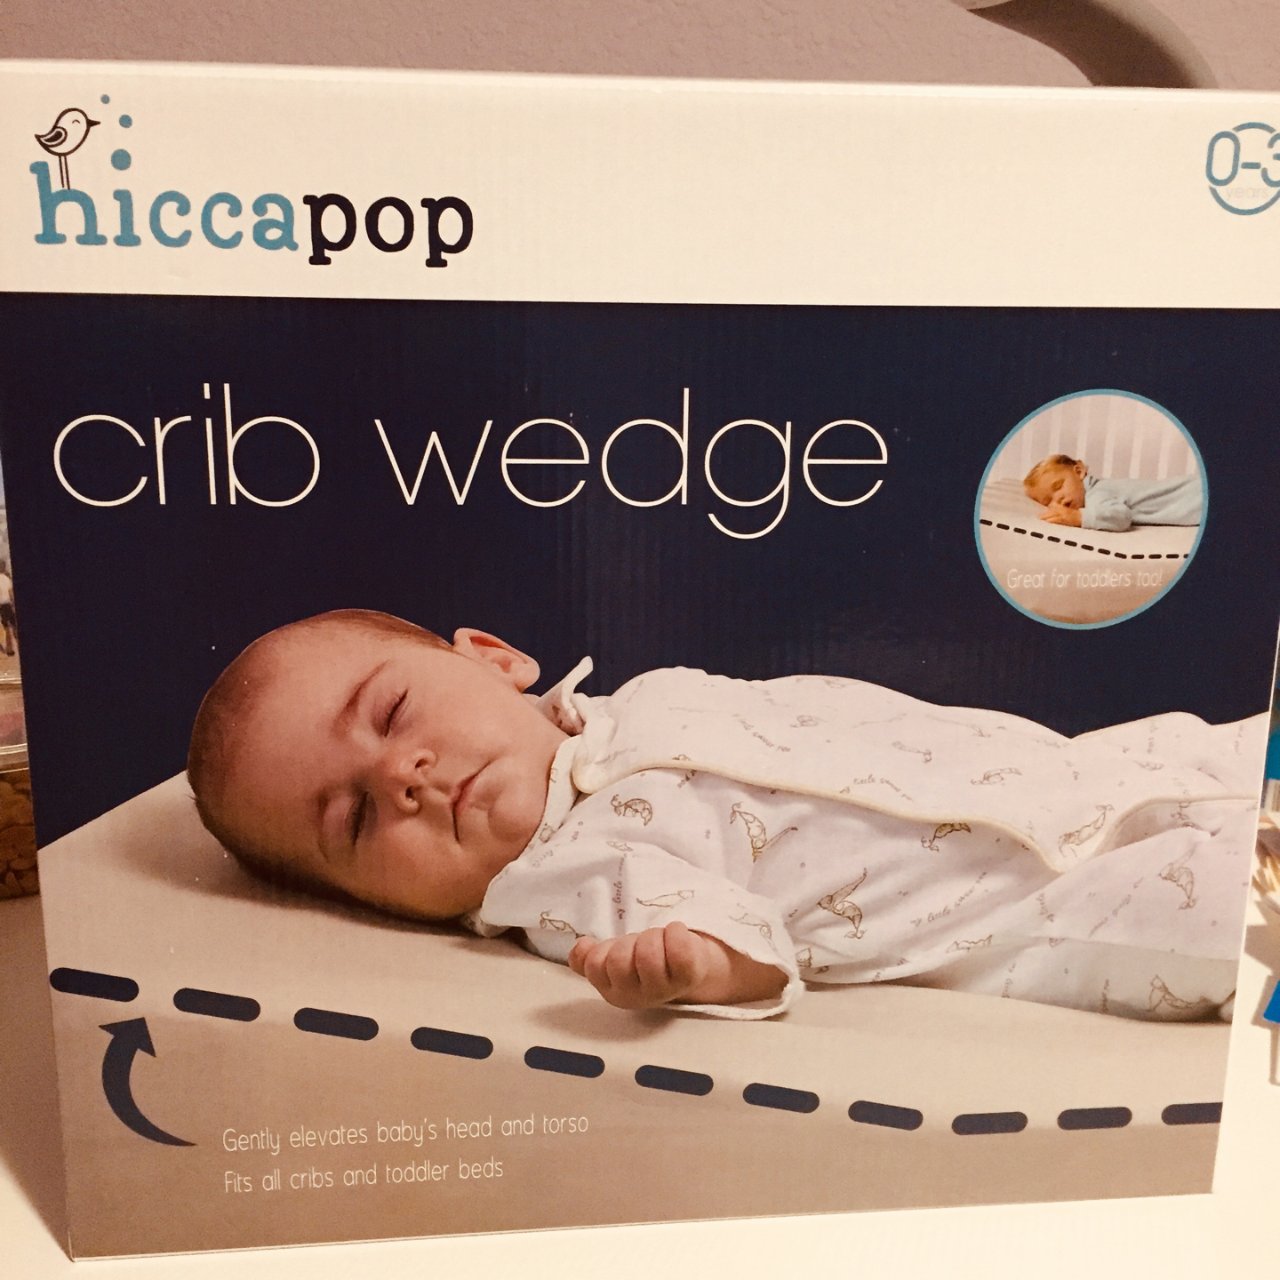 hiccapop,Crib wedge